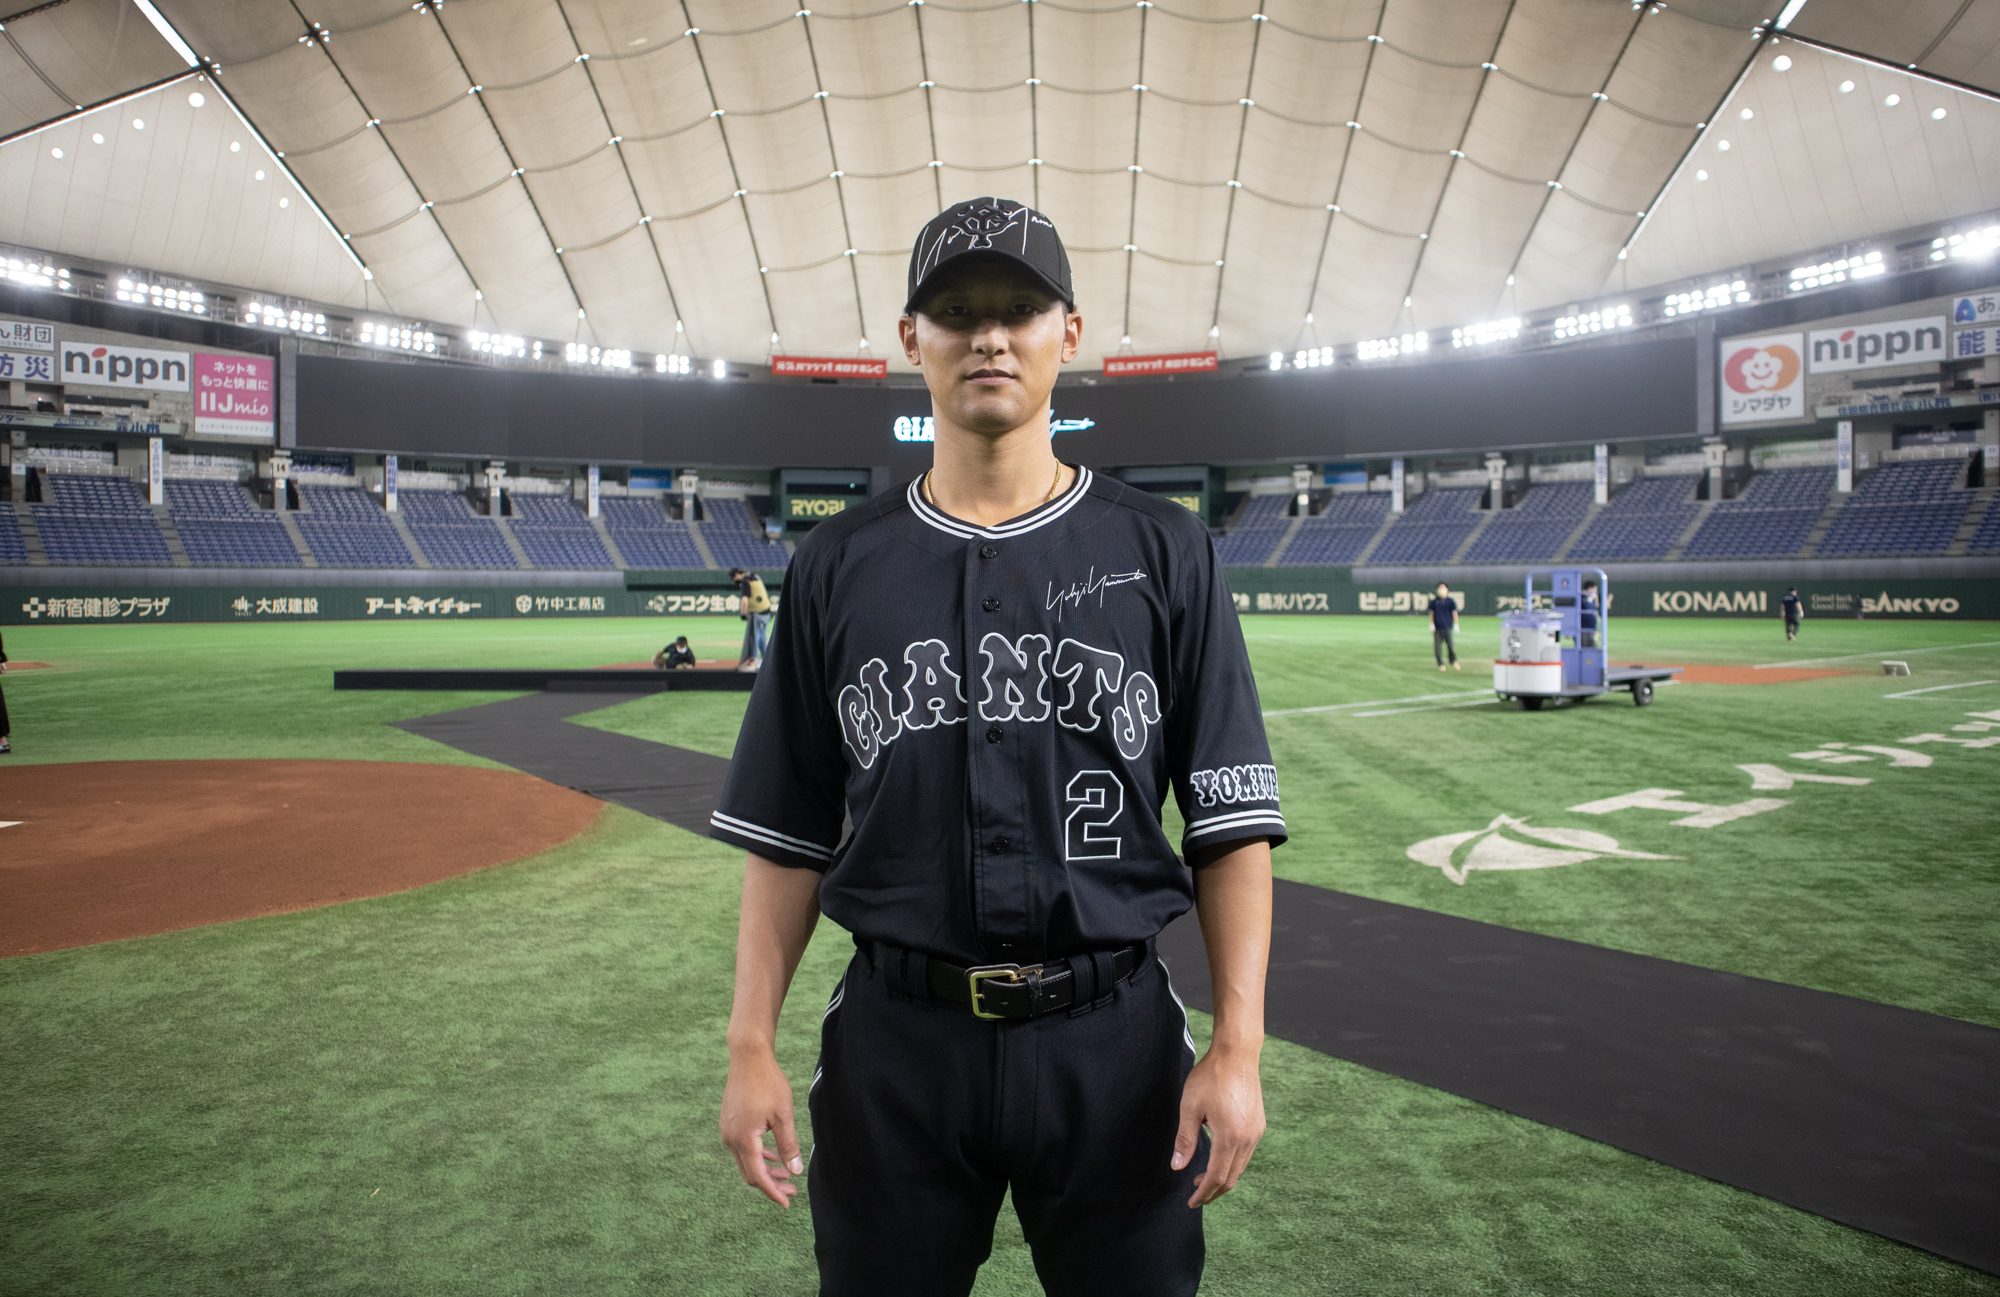 GIANTS ×Yohji Yamamoto レプリカユニホーム吉川 - 野球